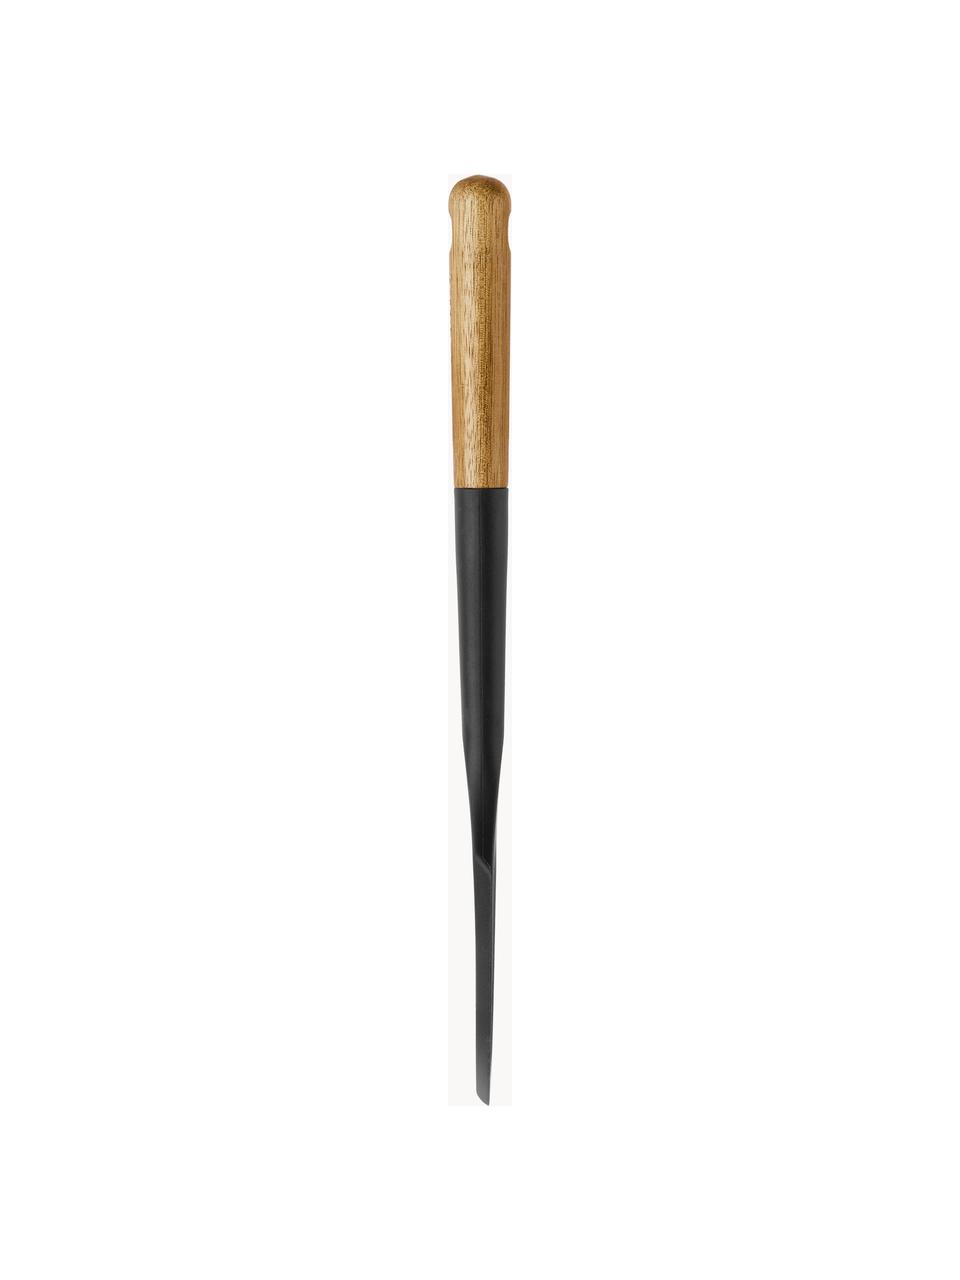 Teigschaber Cook mit Akazienholz-Griff, Silikon, Akazienholz, Schwarz, Dunkles Holz, L 30 cm